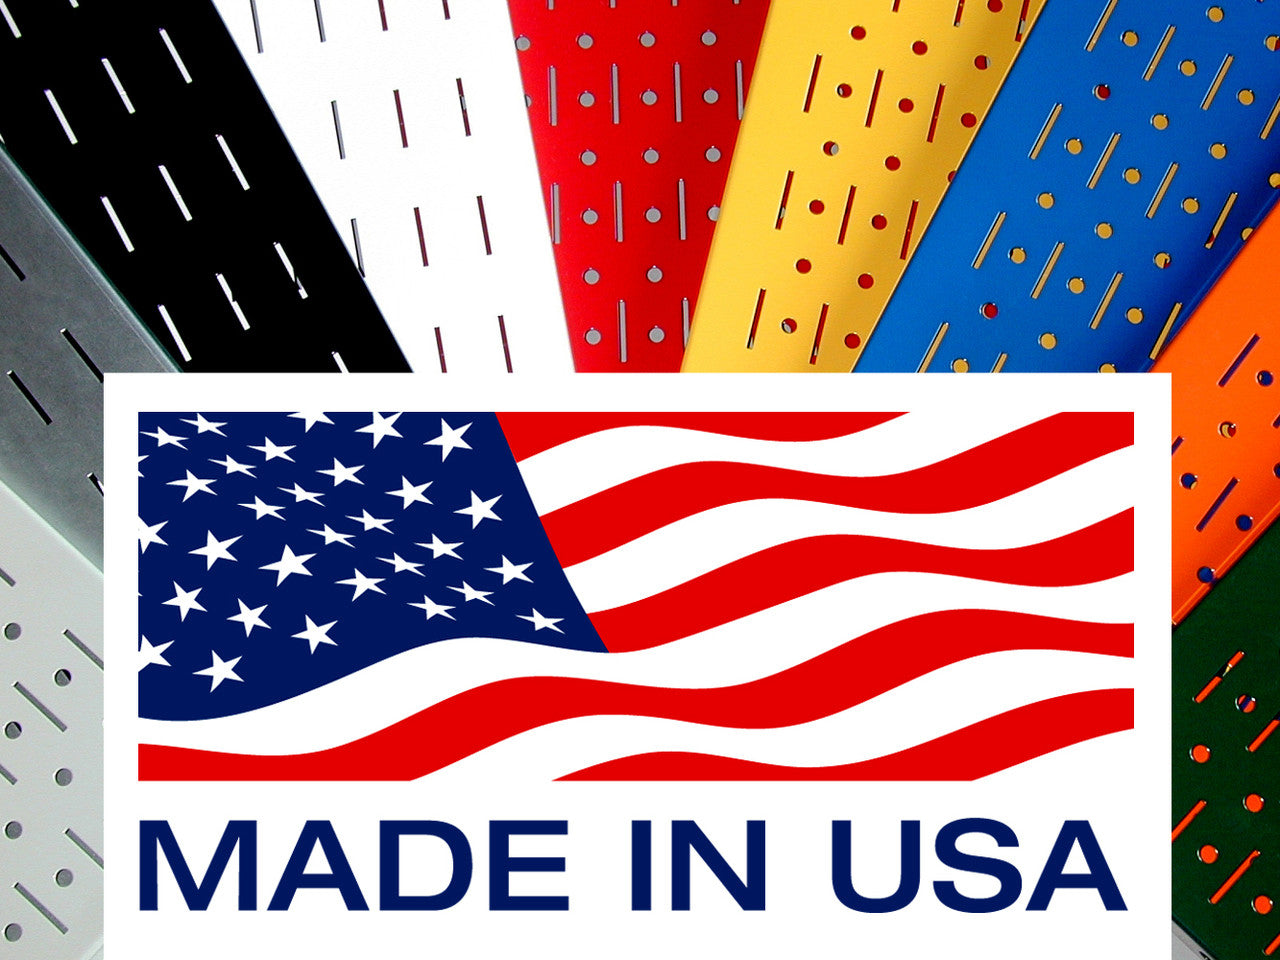 American Made Tool Storage Manufacturer